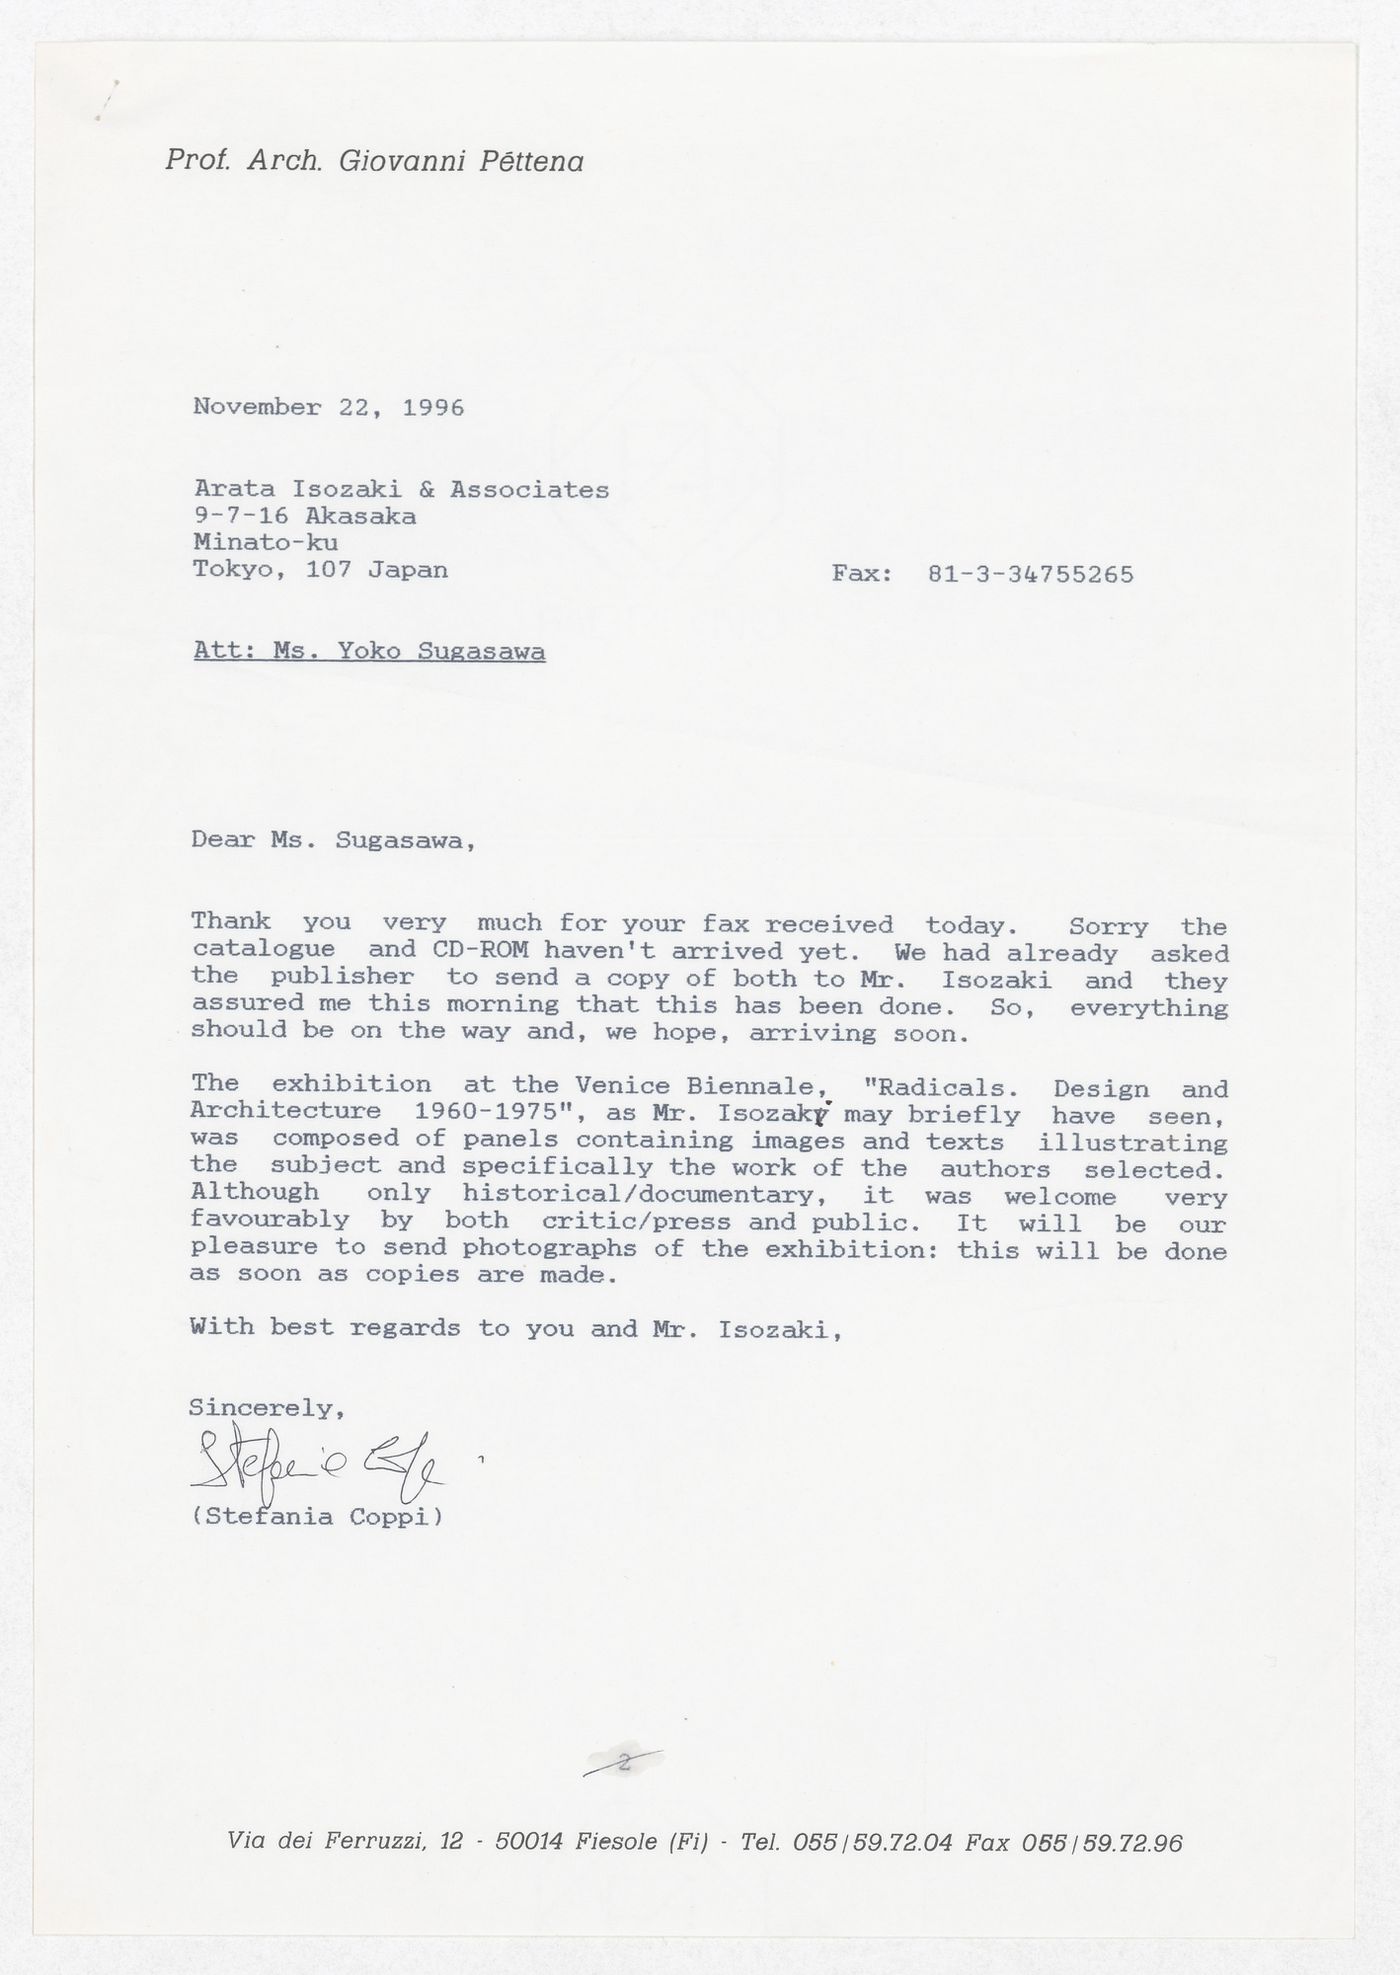 Correspondence with Yoko Sugasawa of Arata Isozaki & Associates regarding the exhibition Radicals. Architecttura e Design 1960-1975